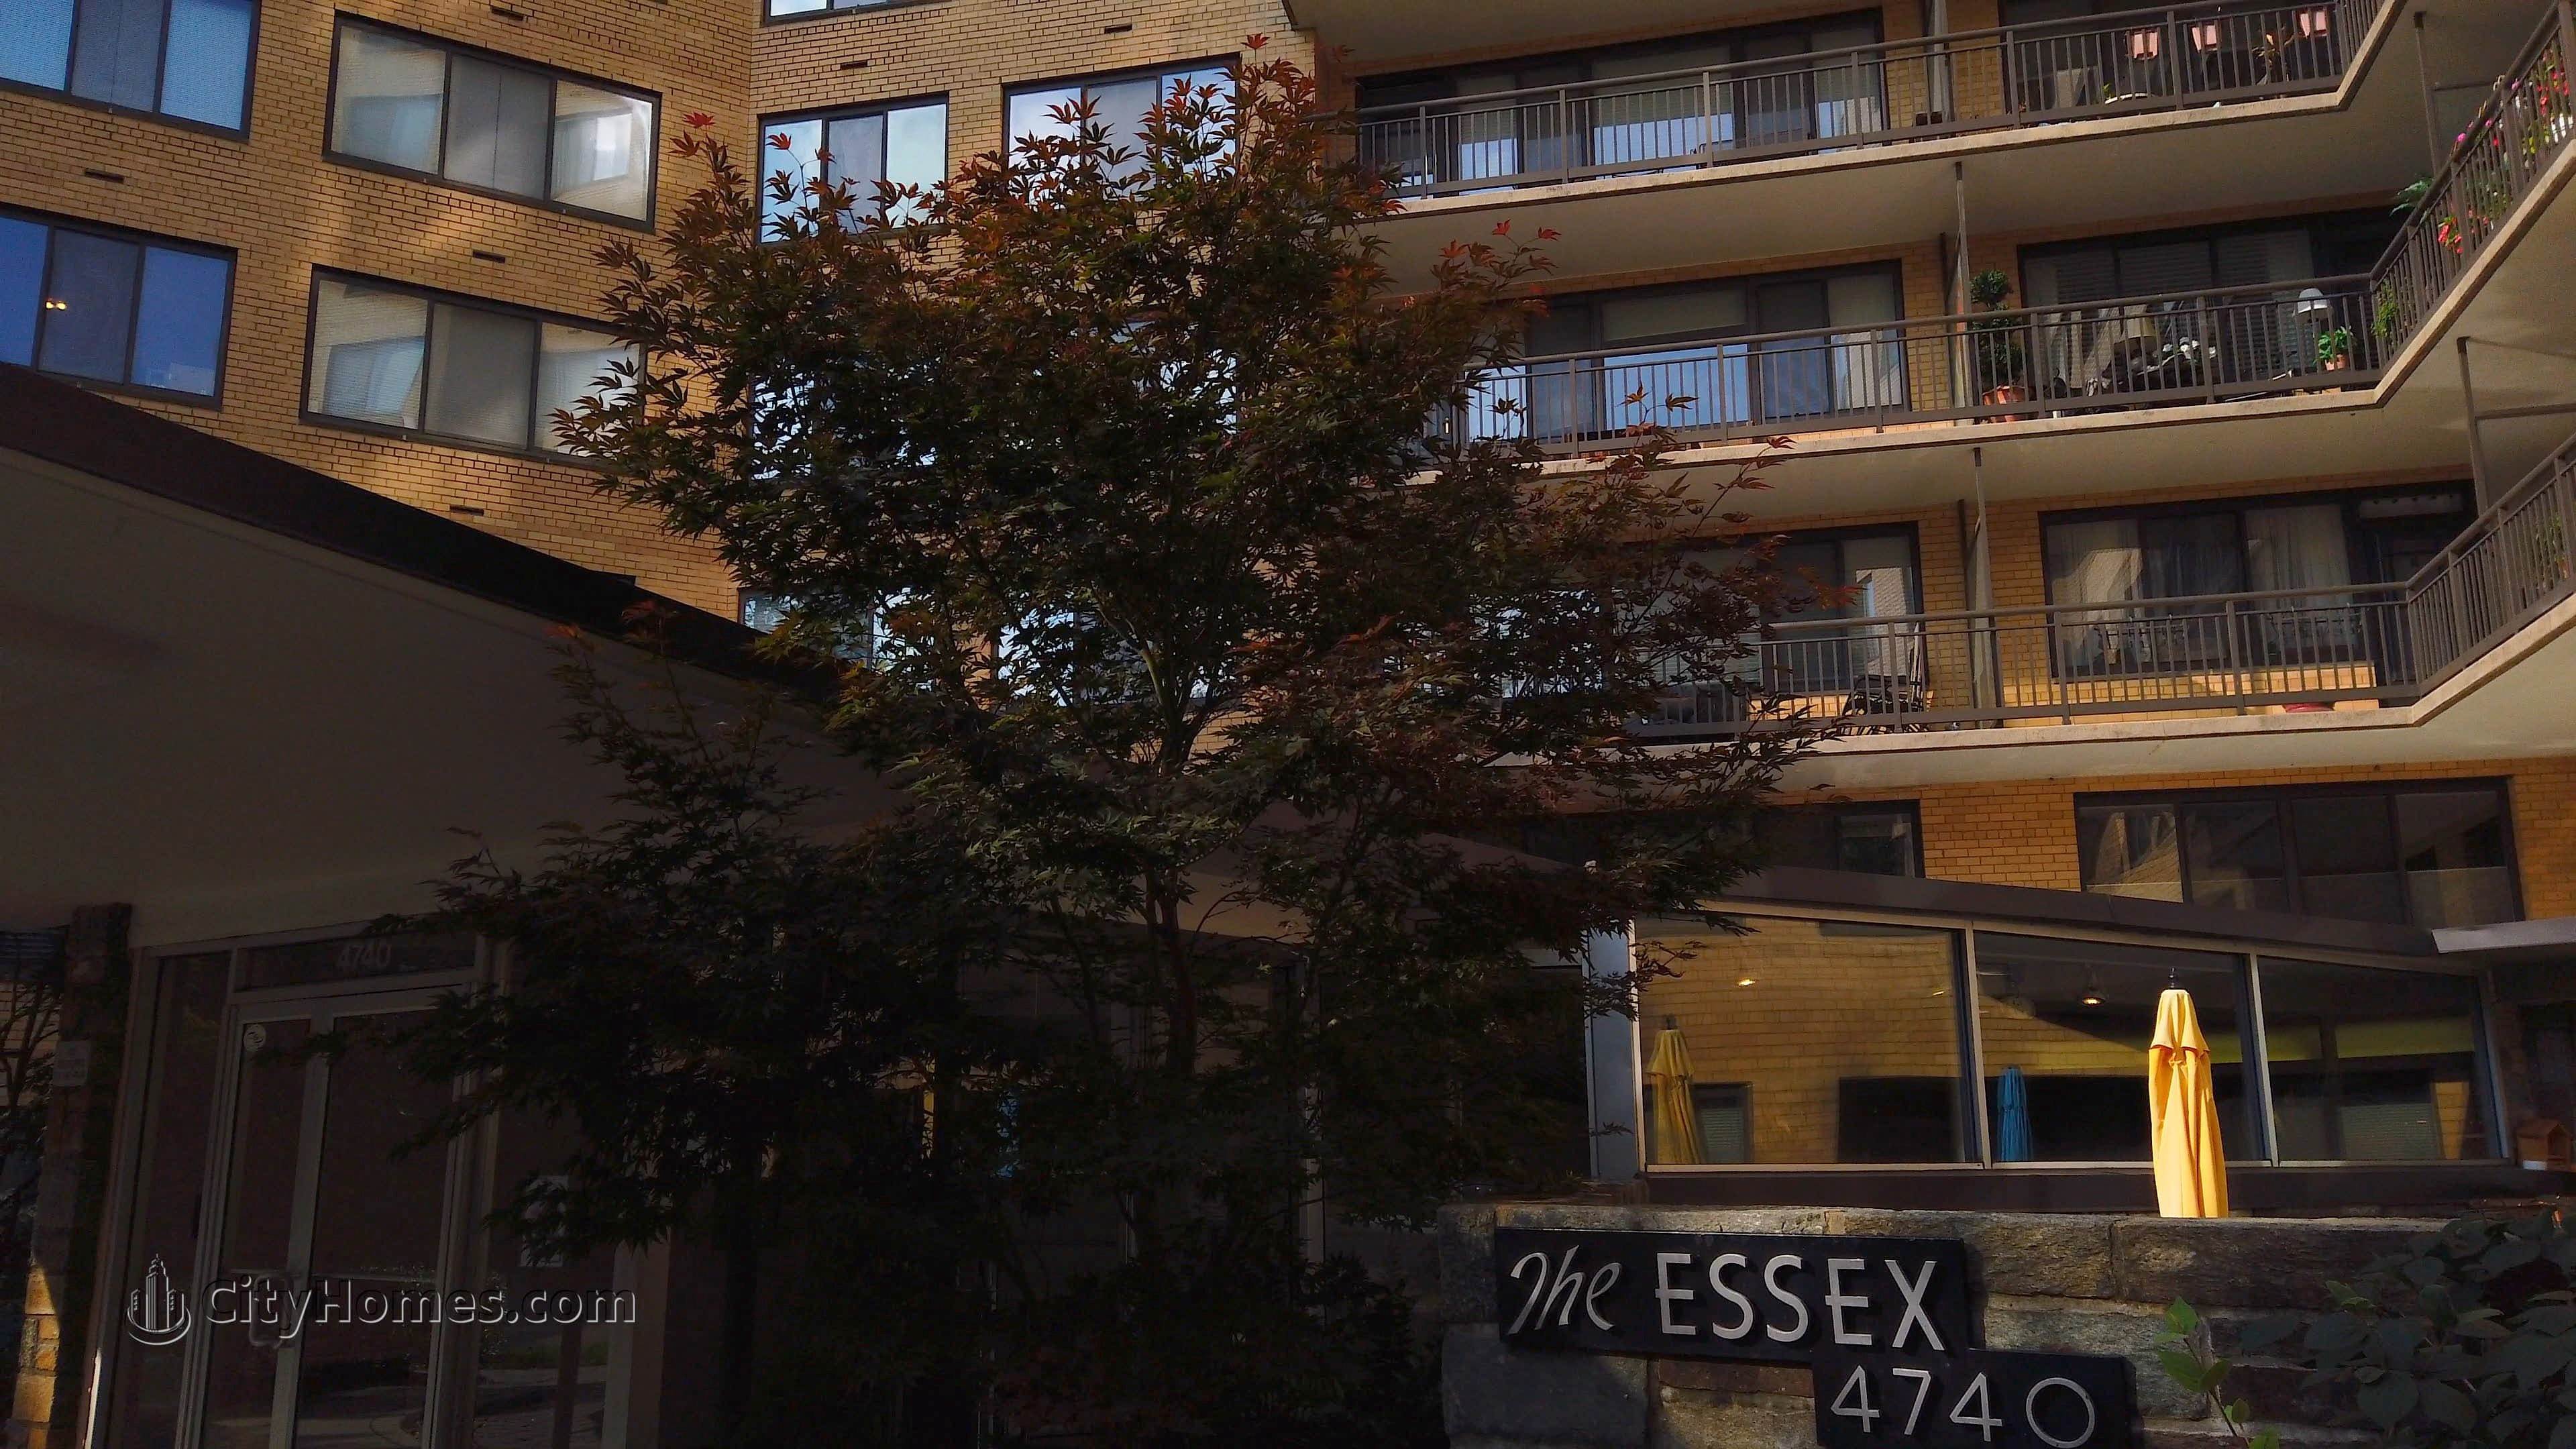 The Essex gebouw op 4740 Connecticut Ave NW, Wakefield, Washington, DC 20008